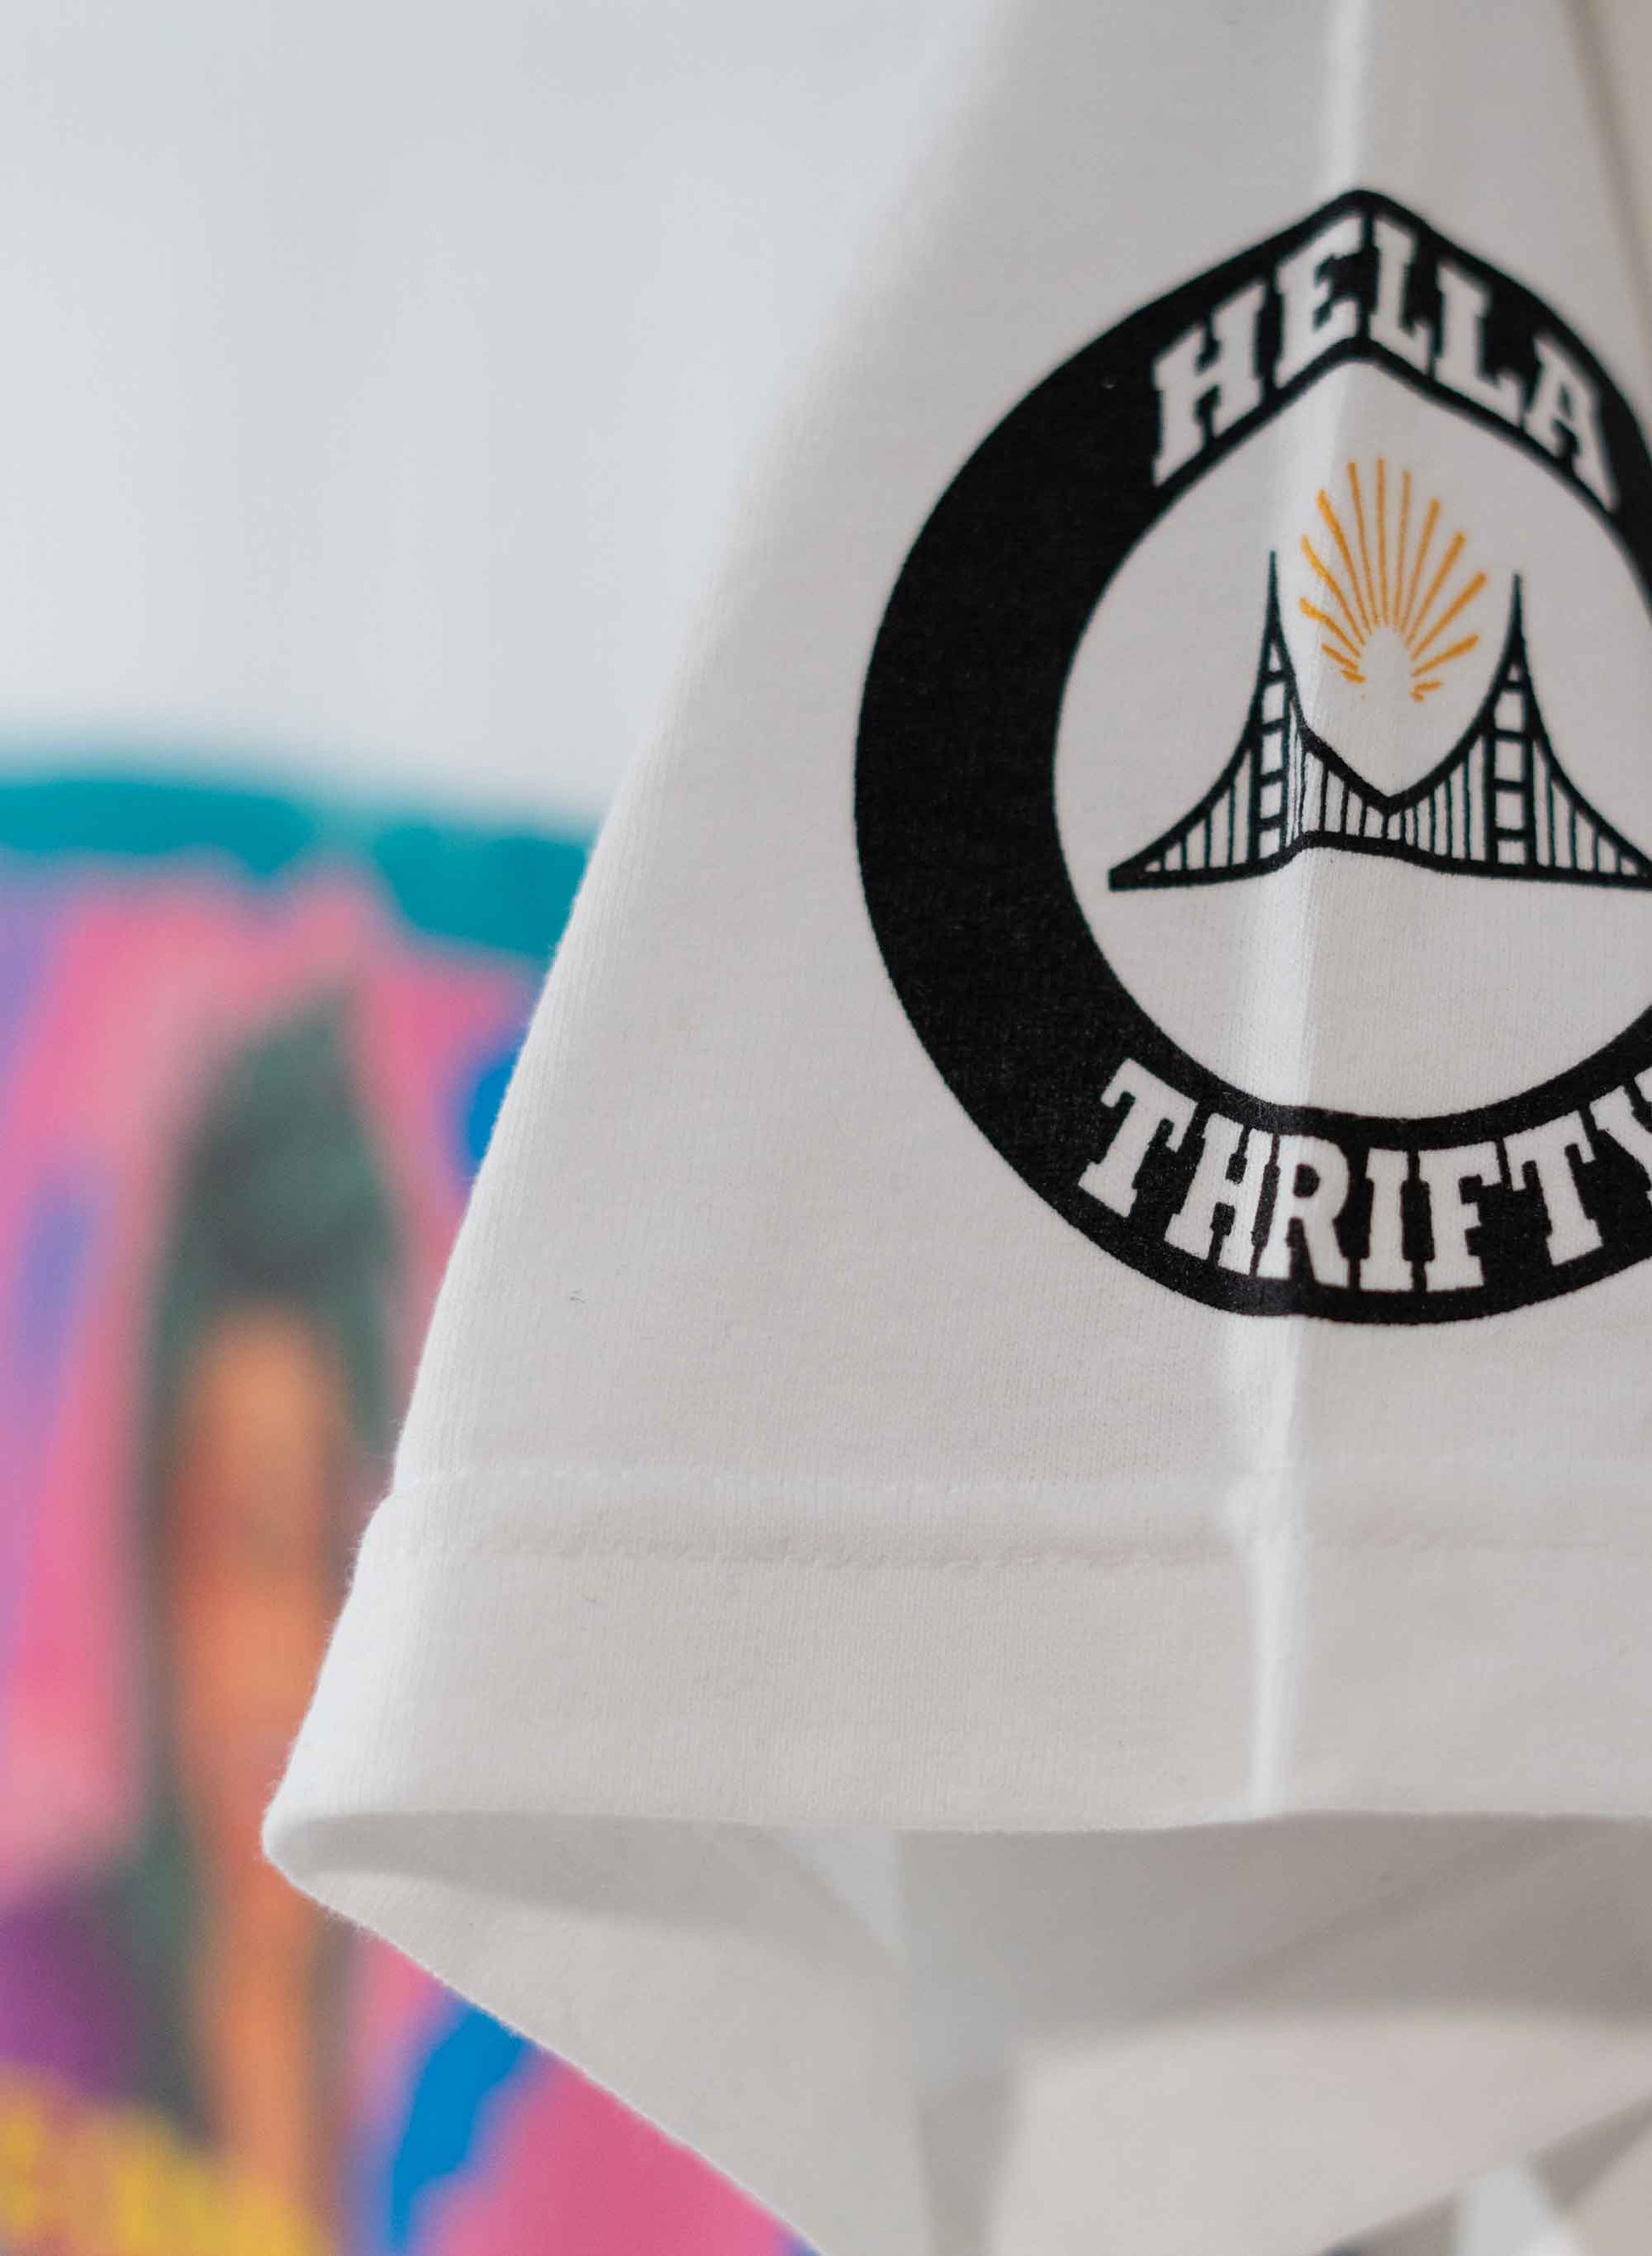 Hella Thrifty logo on the left short sleeve